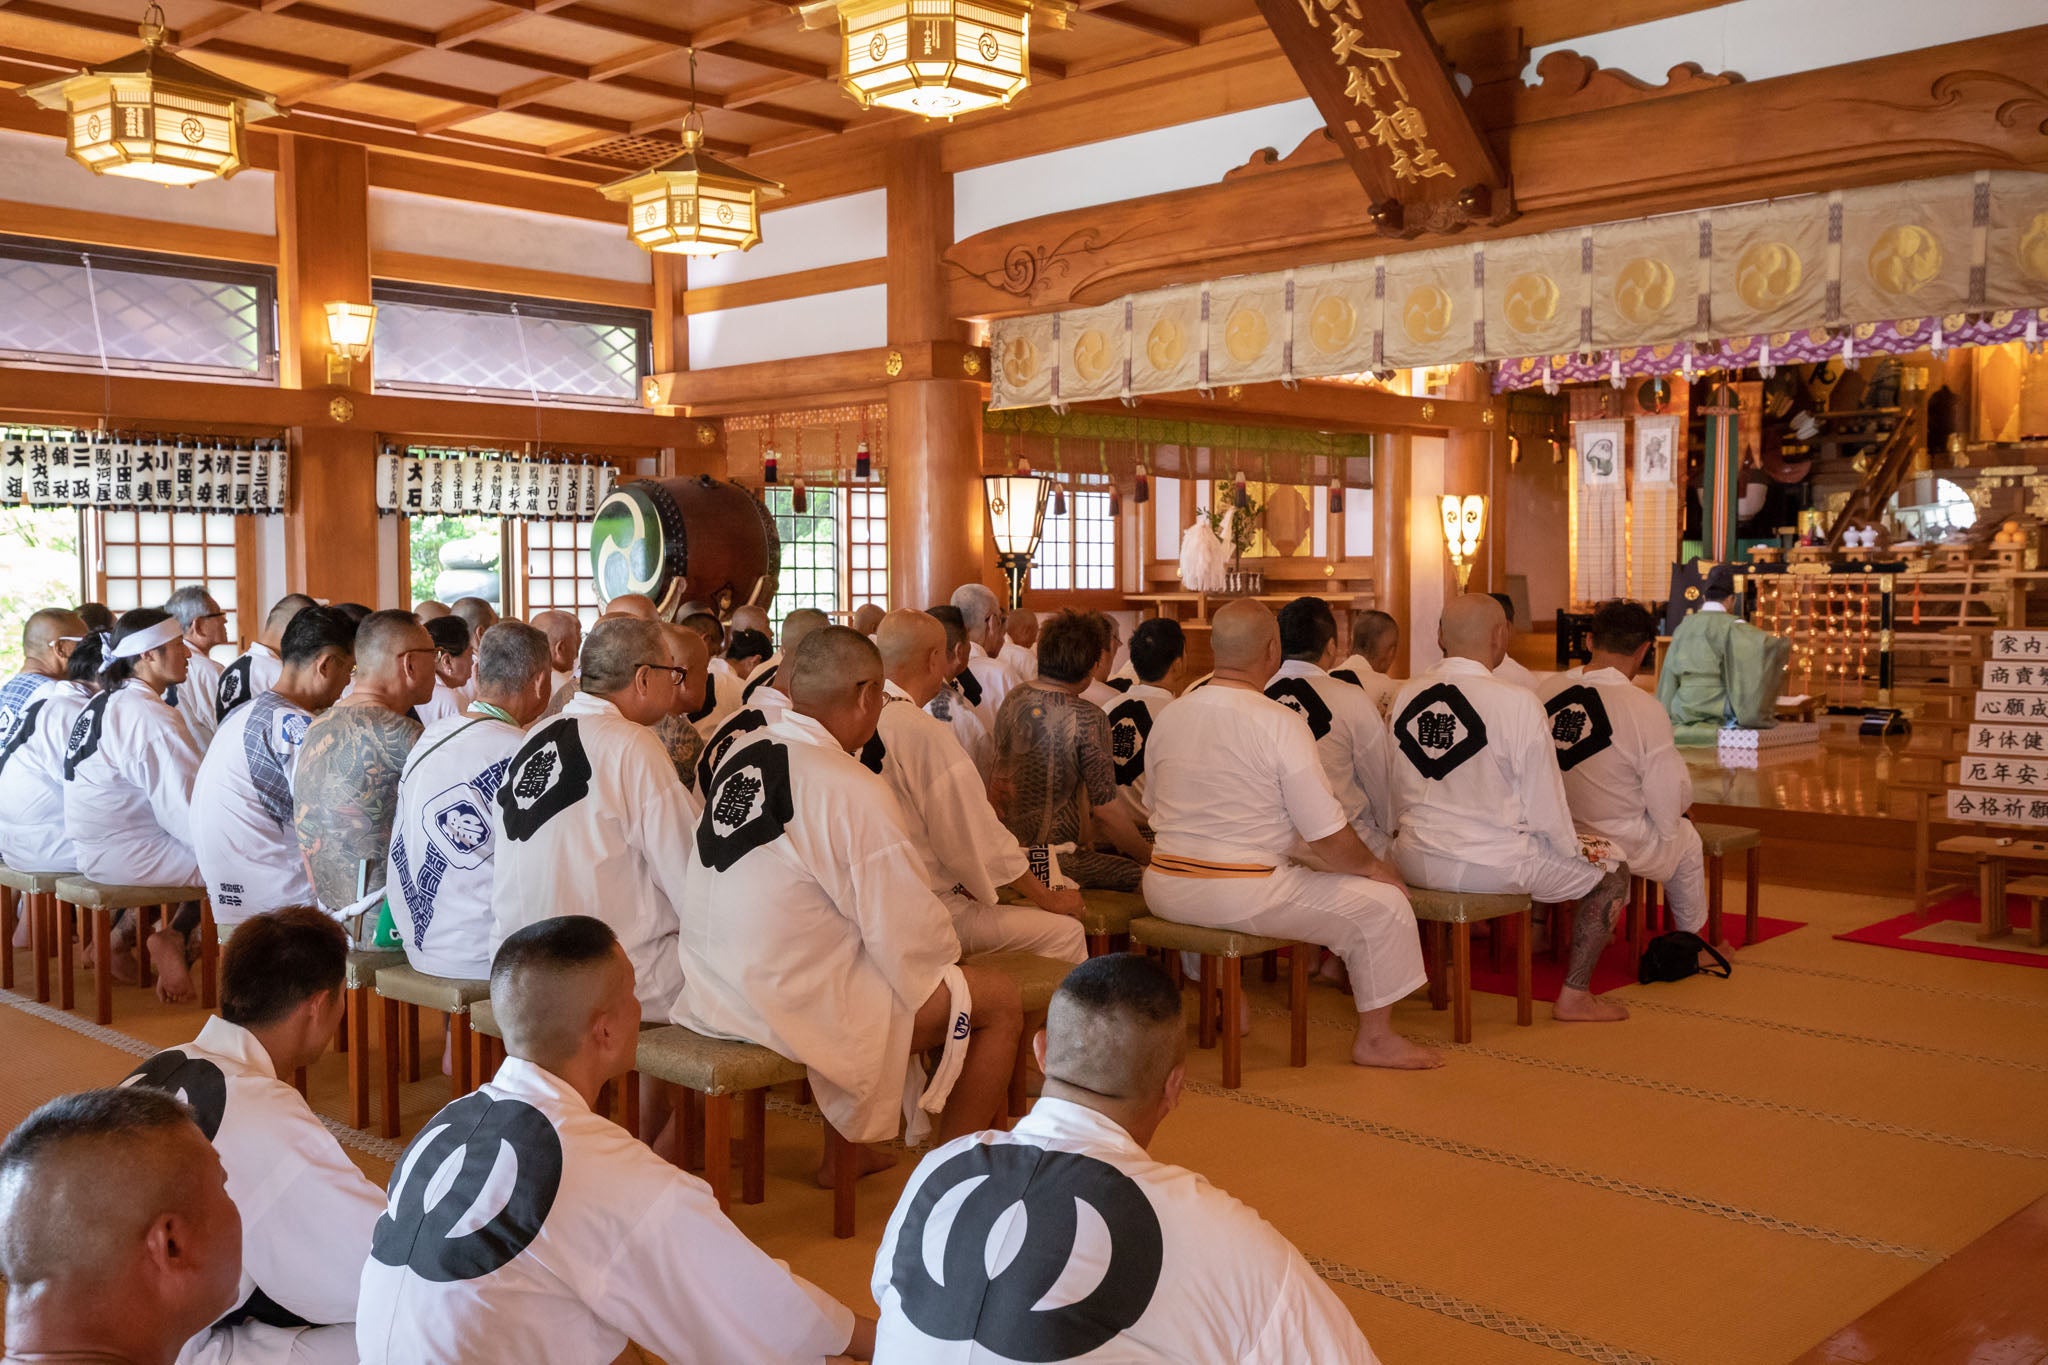 Pilgrims saying prayers at Mt. Oyama Shrine in Japan